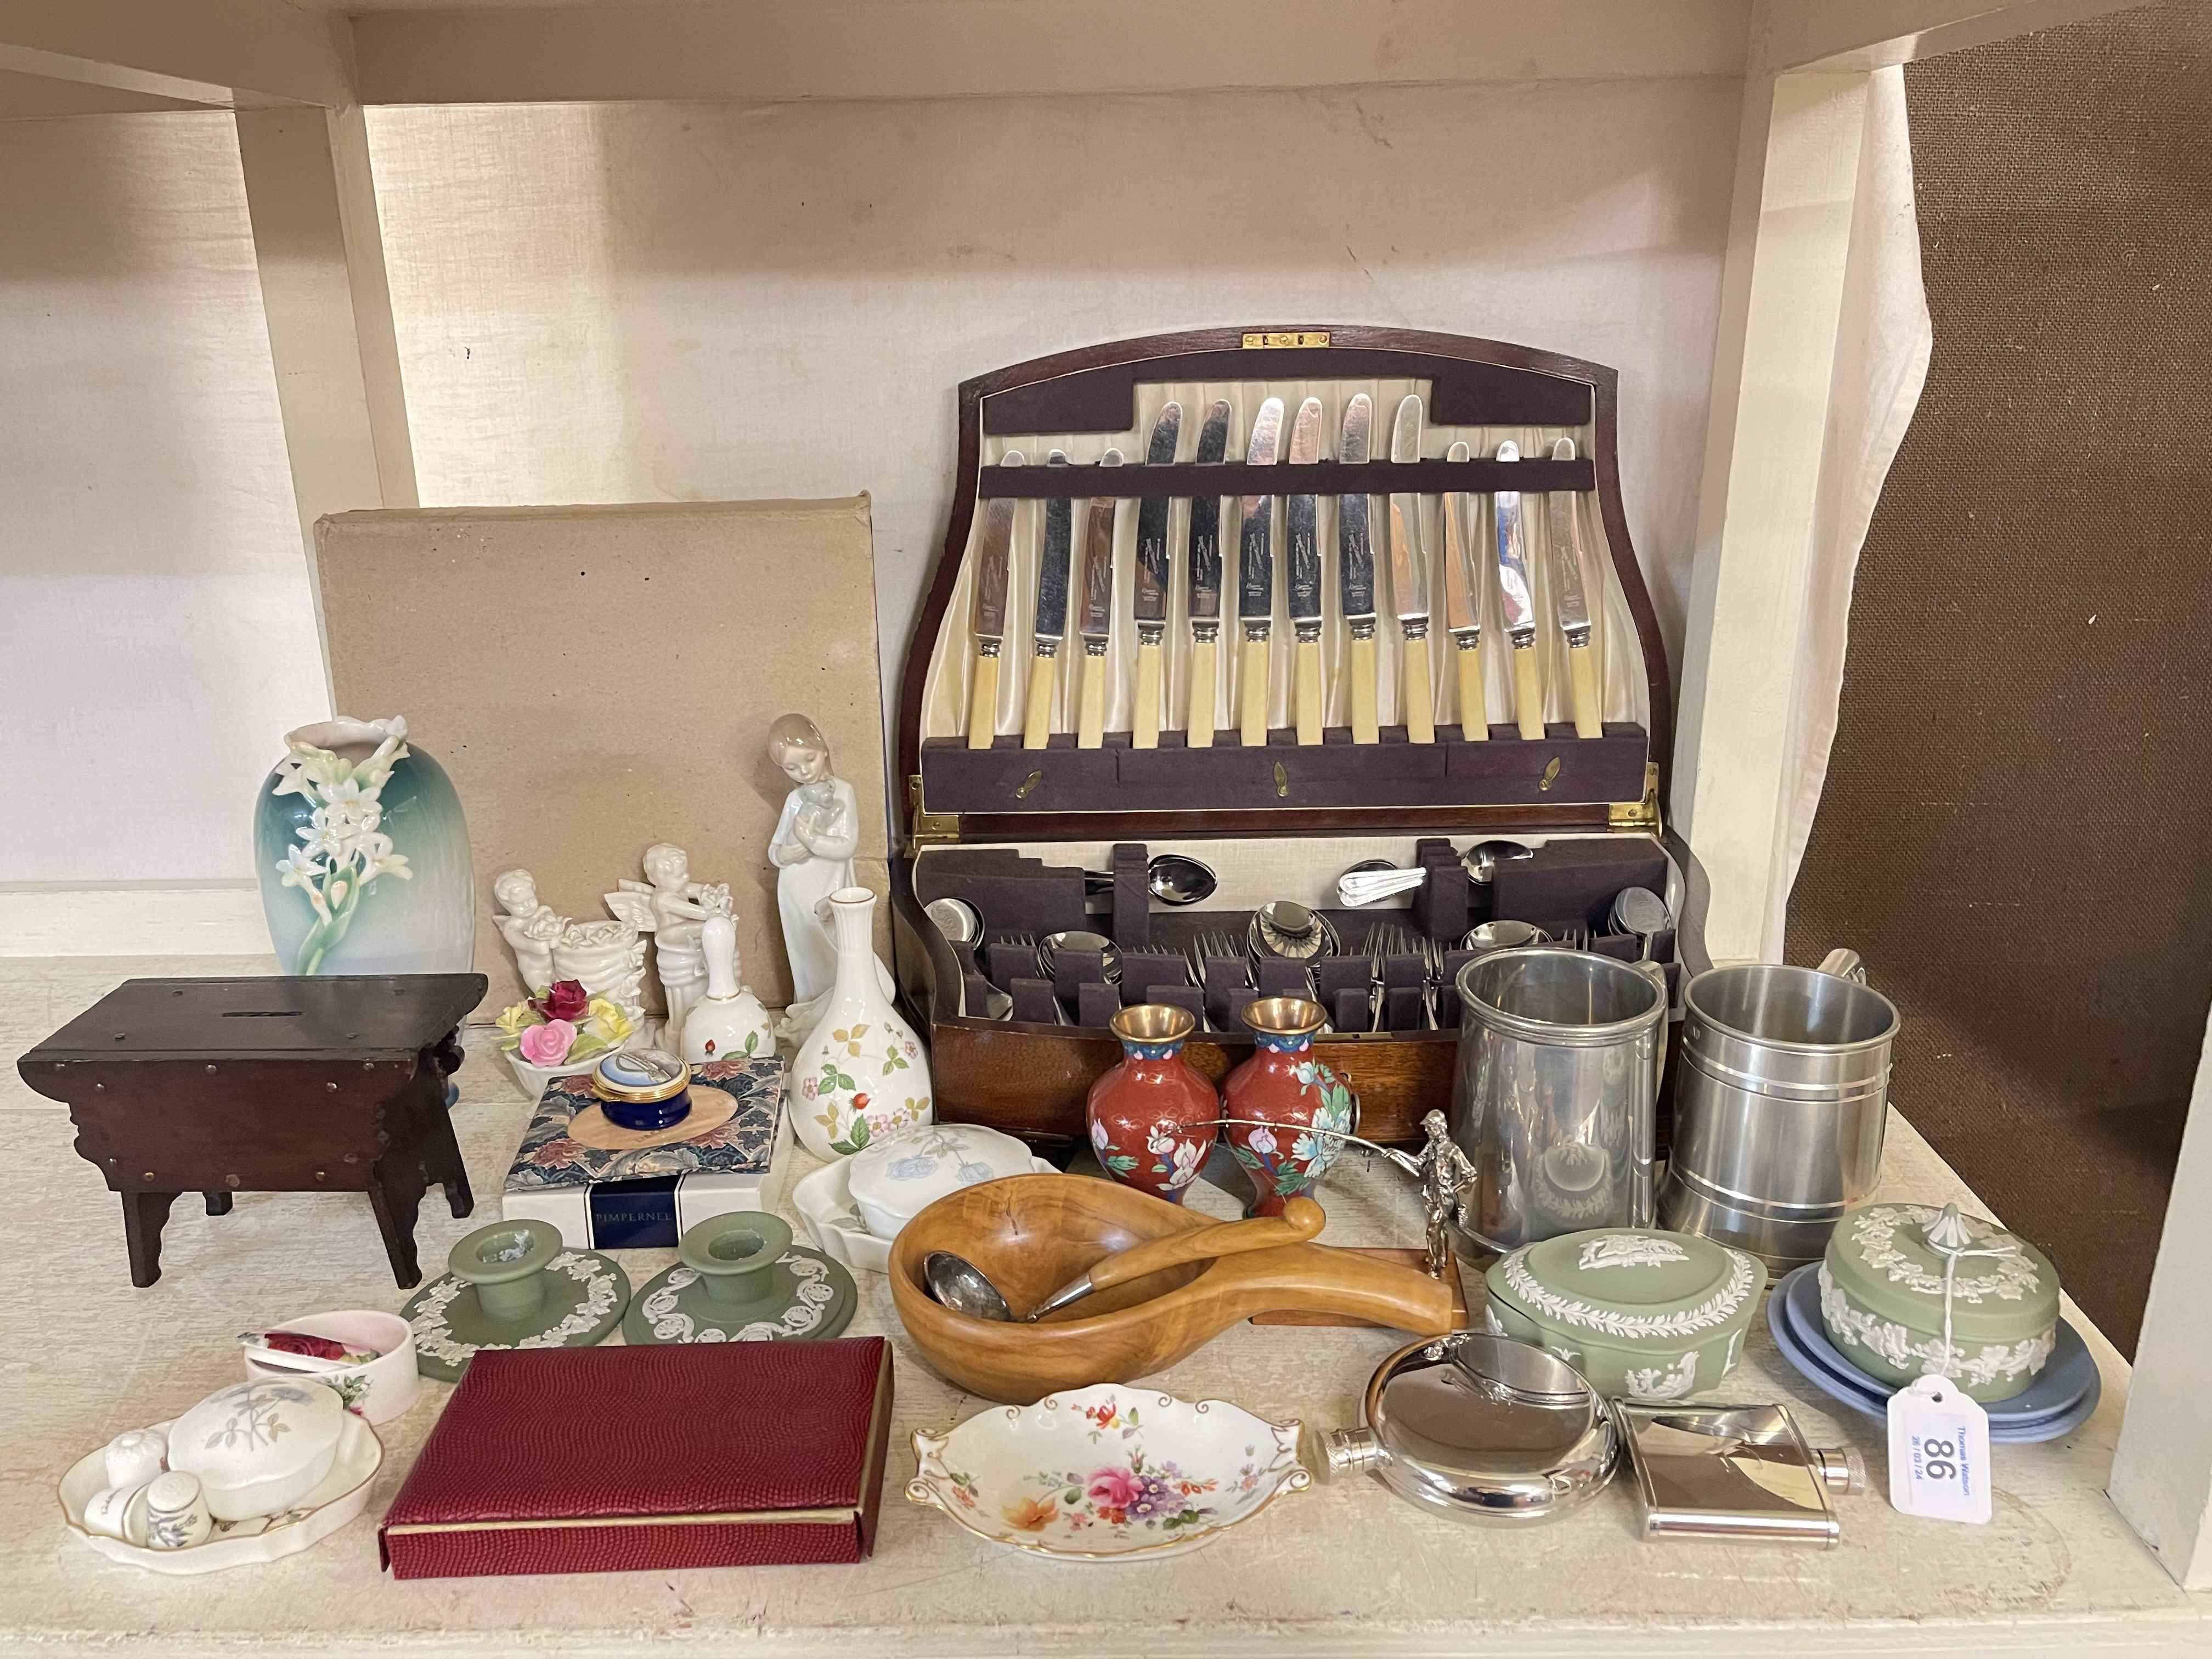 Canteen of cutlery, Cloisonné vases, Lladro, Franz, metalwares, etc.